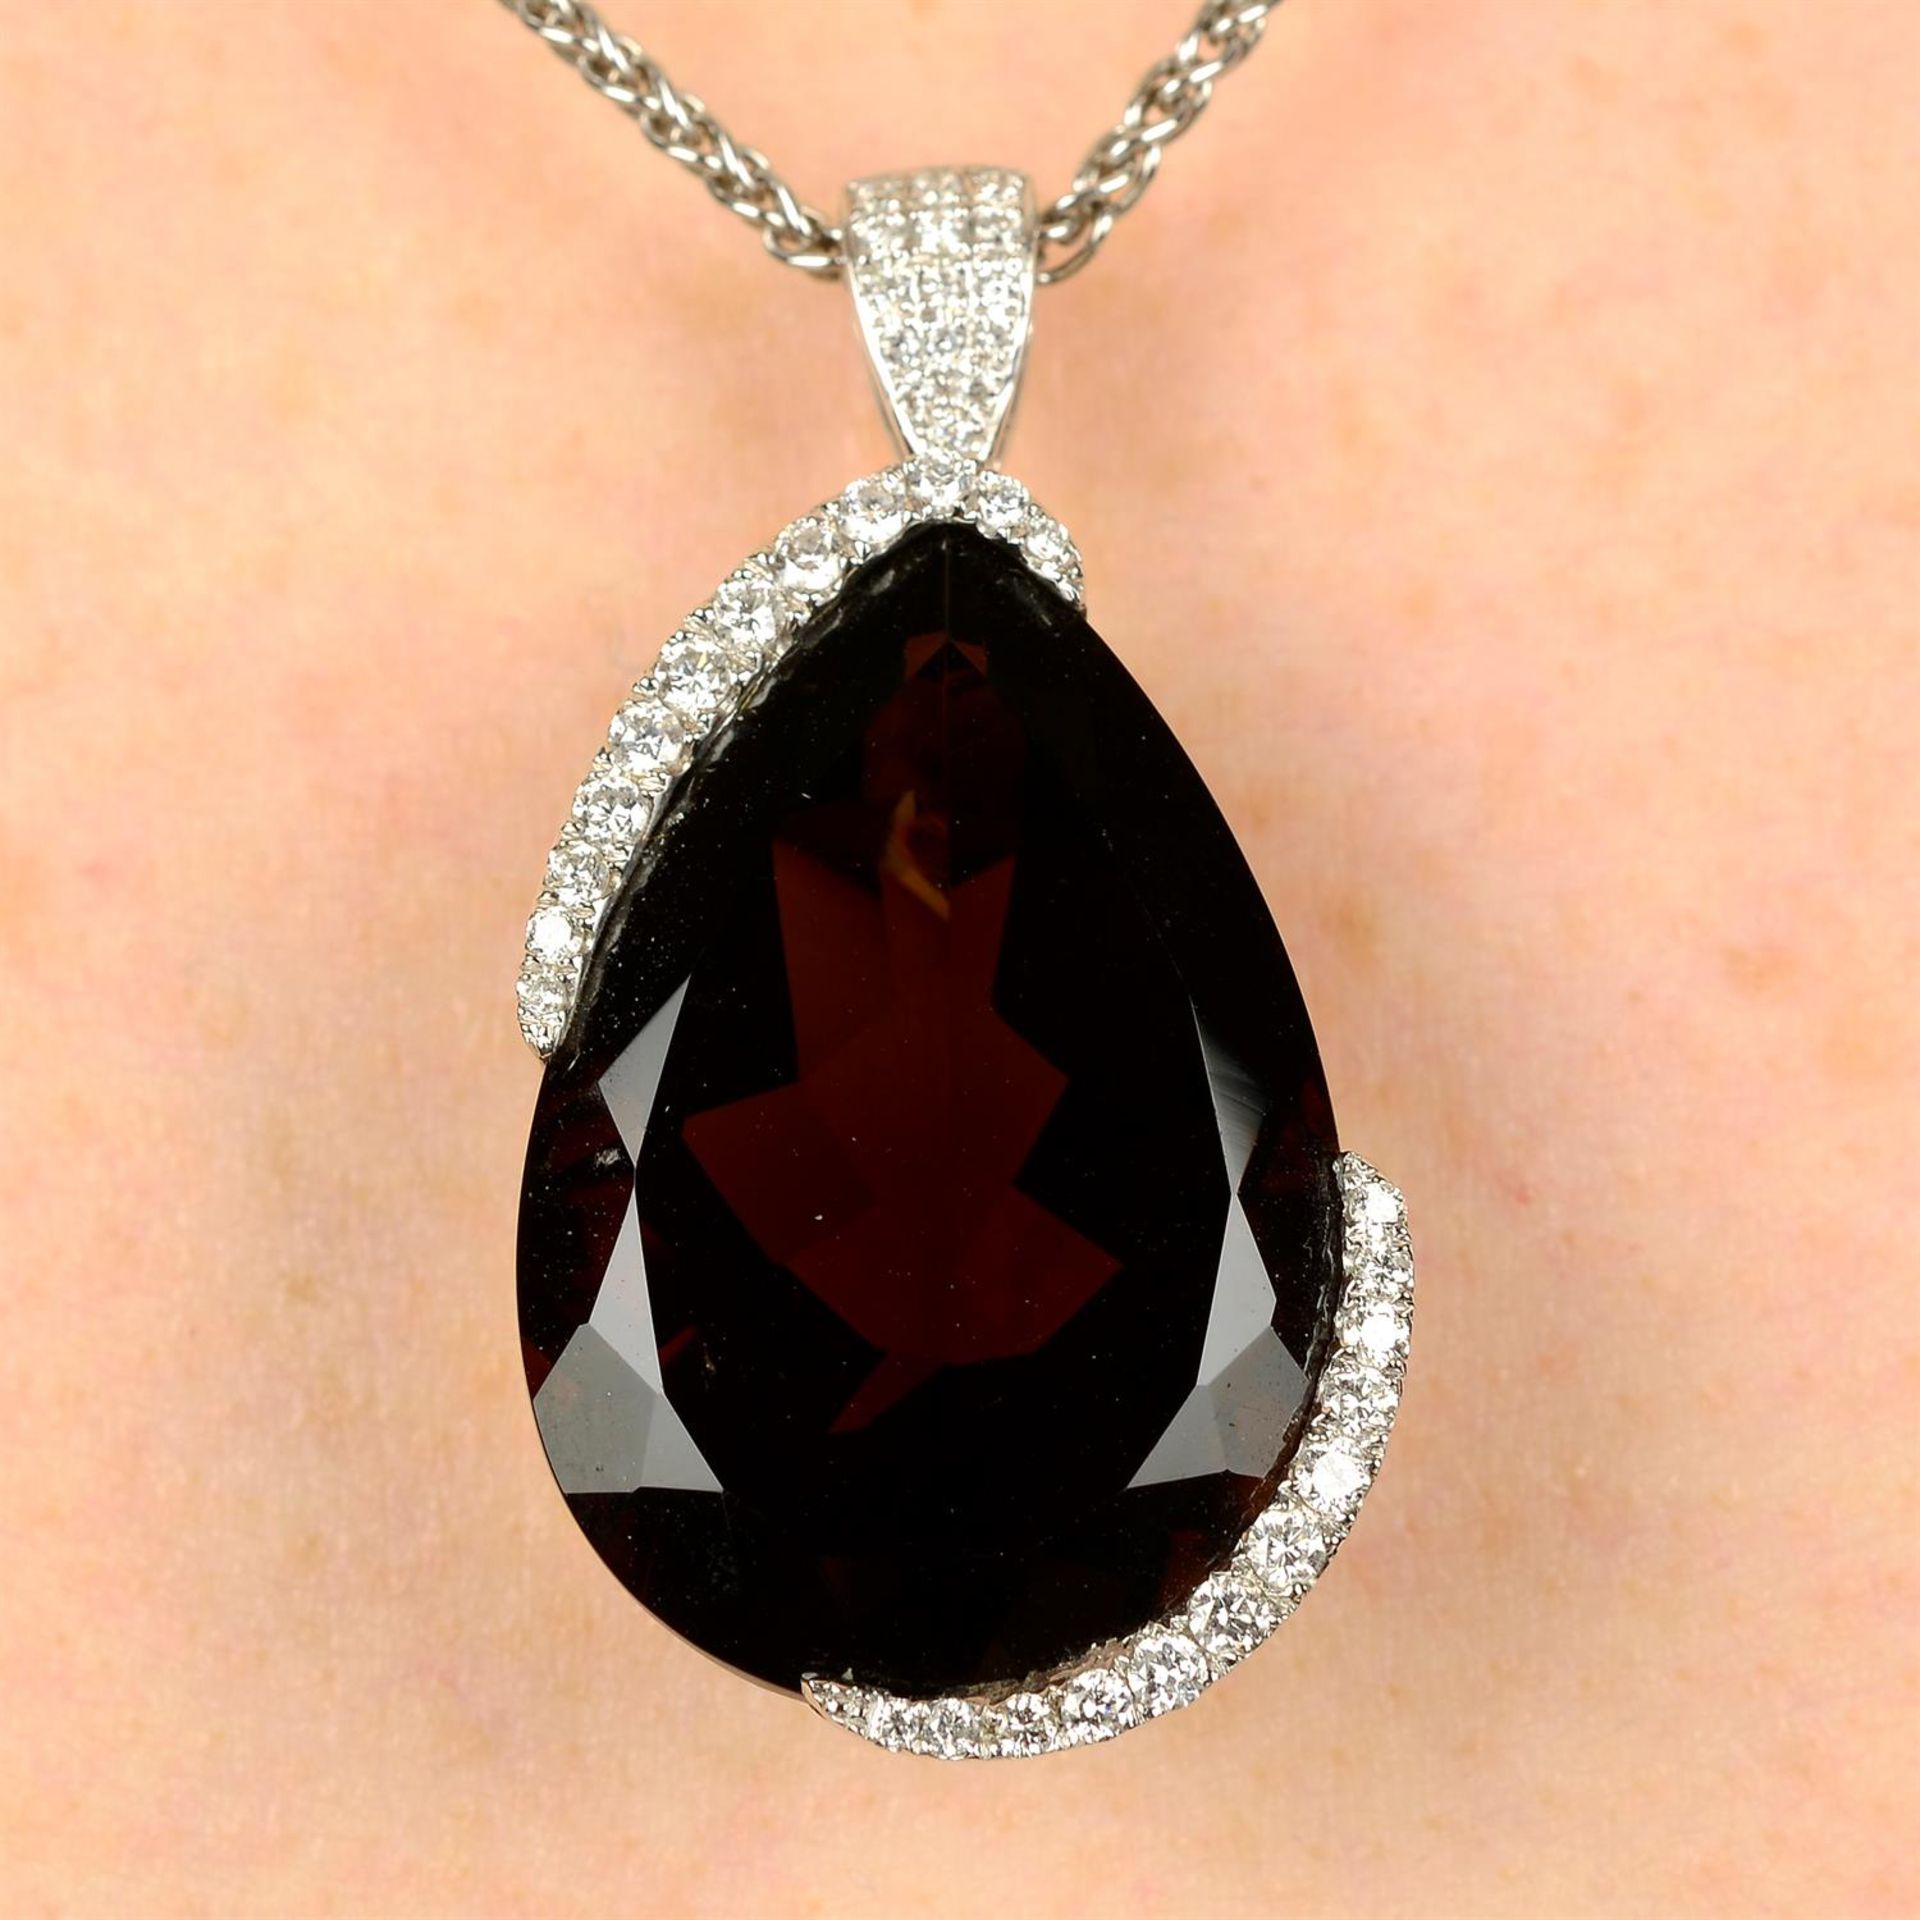 A smokey quartz and diamond pendant, with 18ct gold chain.